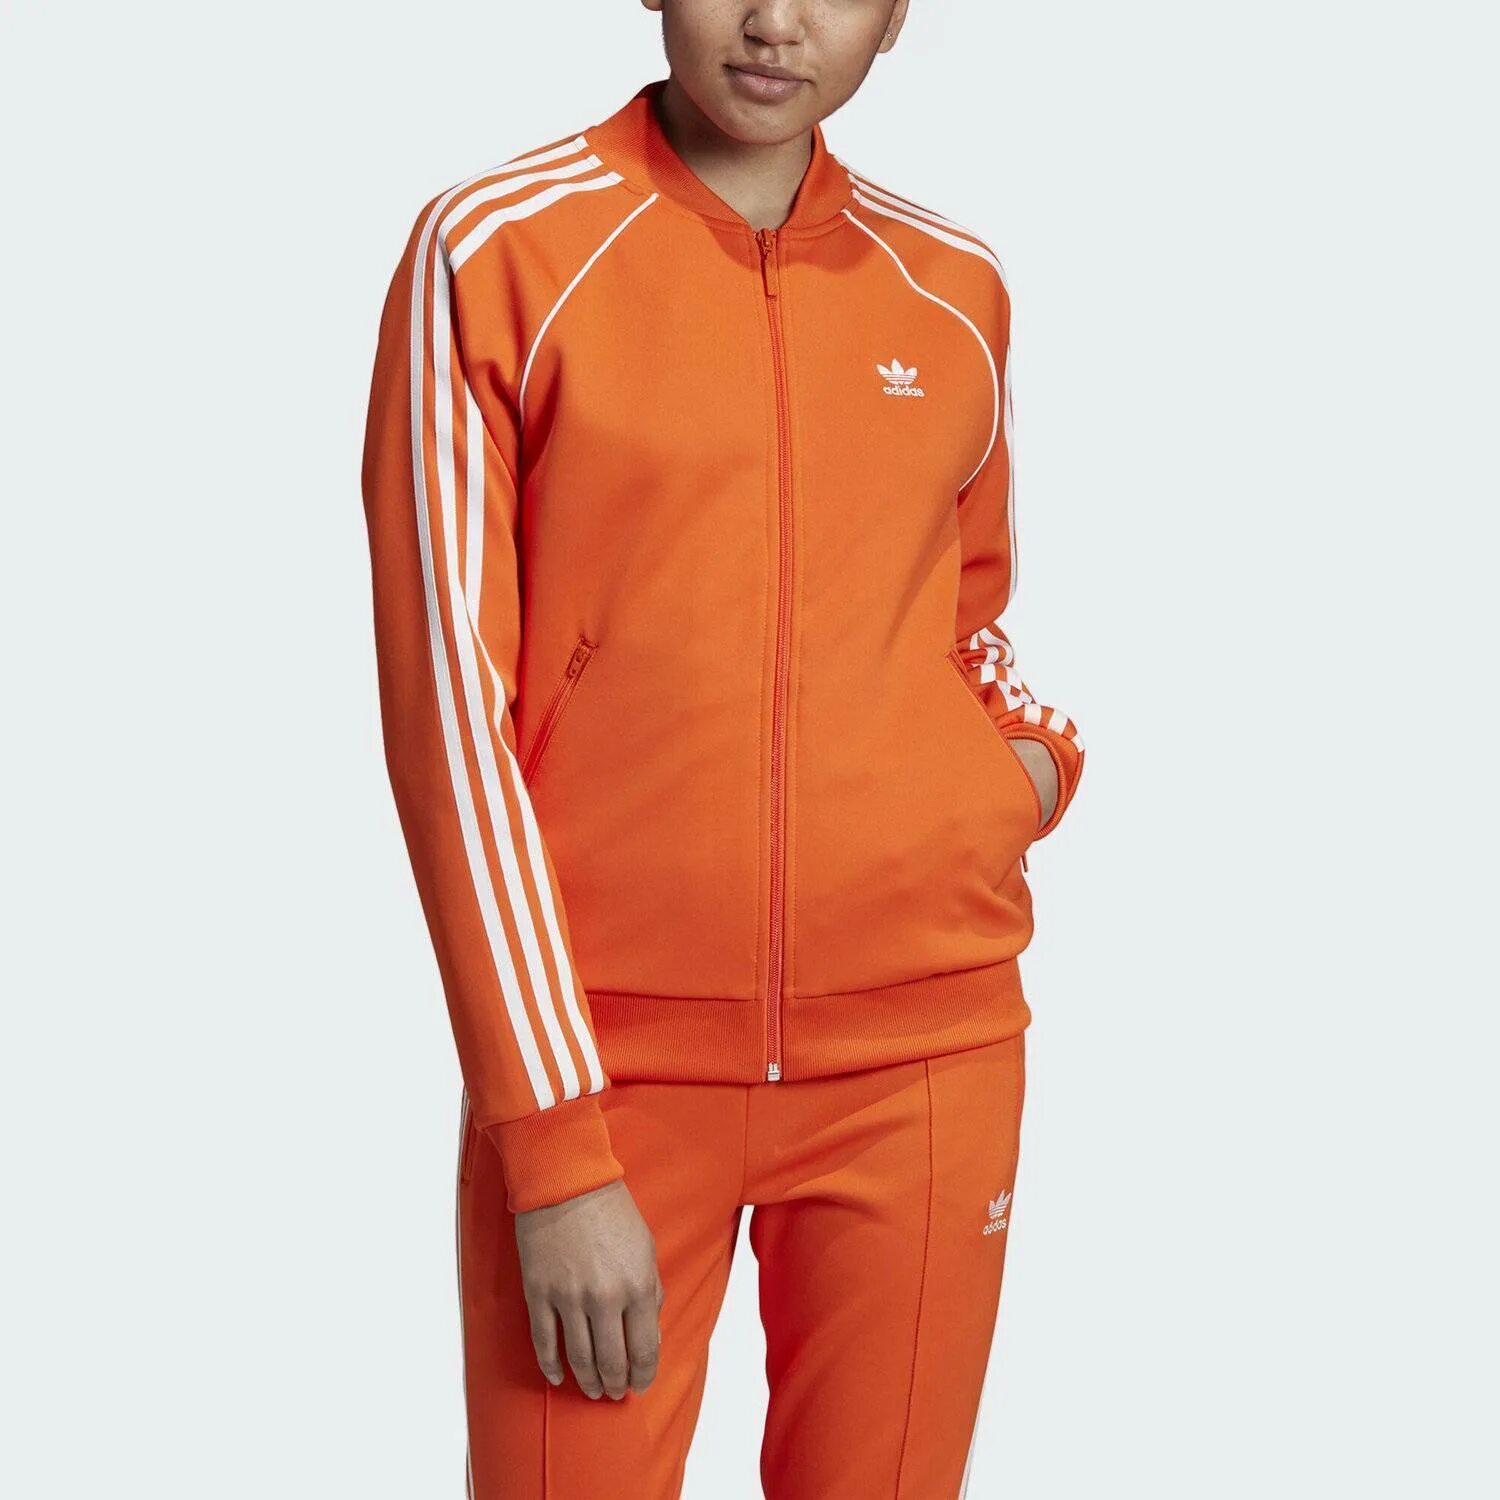 Adidas SST олимпийка мужская оранжевая. Адидас ориджинал оранжевая олимпийка adidas Originals. Костюм адидас SST оранжевый. Оранжевая олимпийка адидас женская ориджинал.